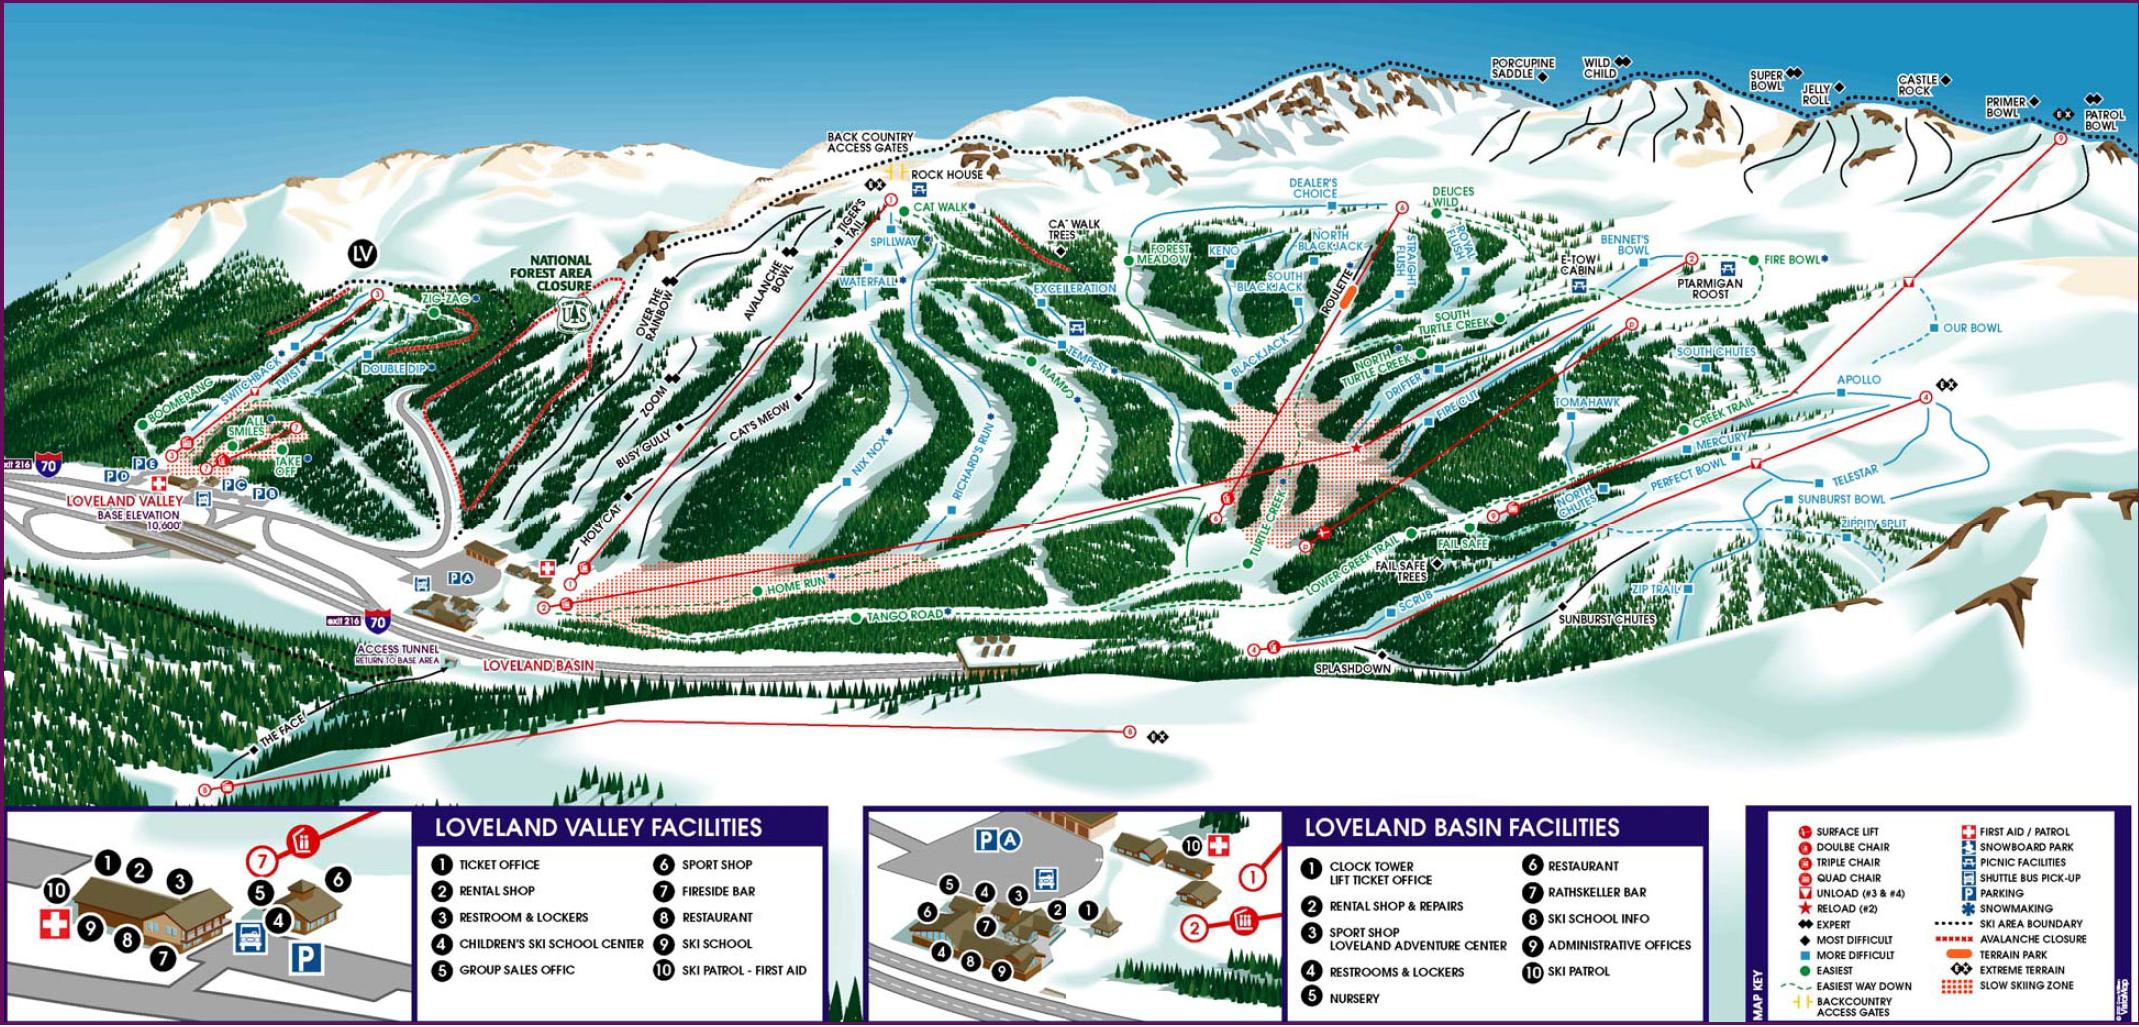 Skiing & Snowboarding Loveland Ski Area - Colorado Ski Travel Guide